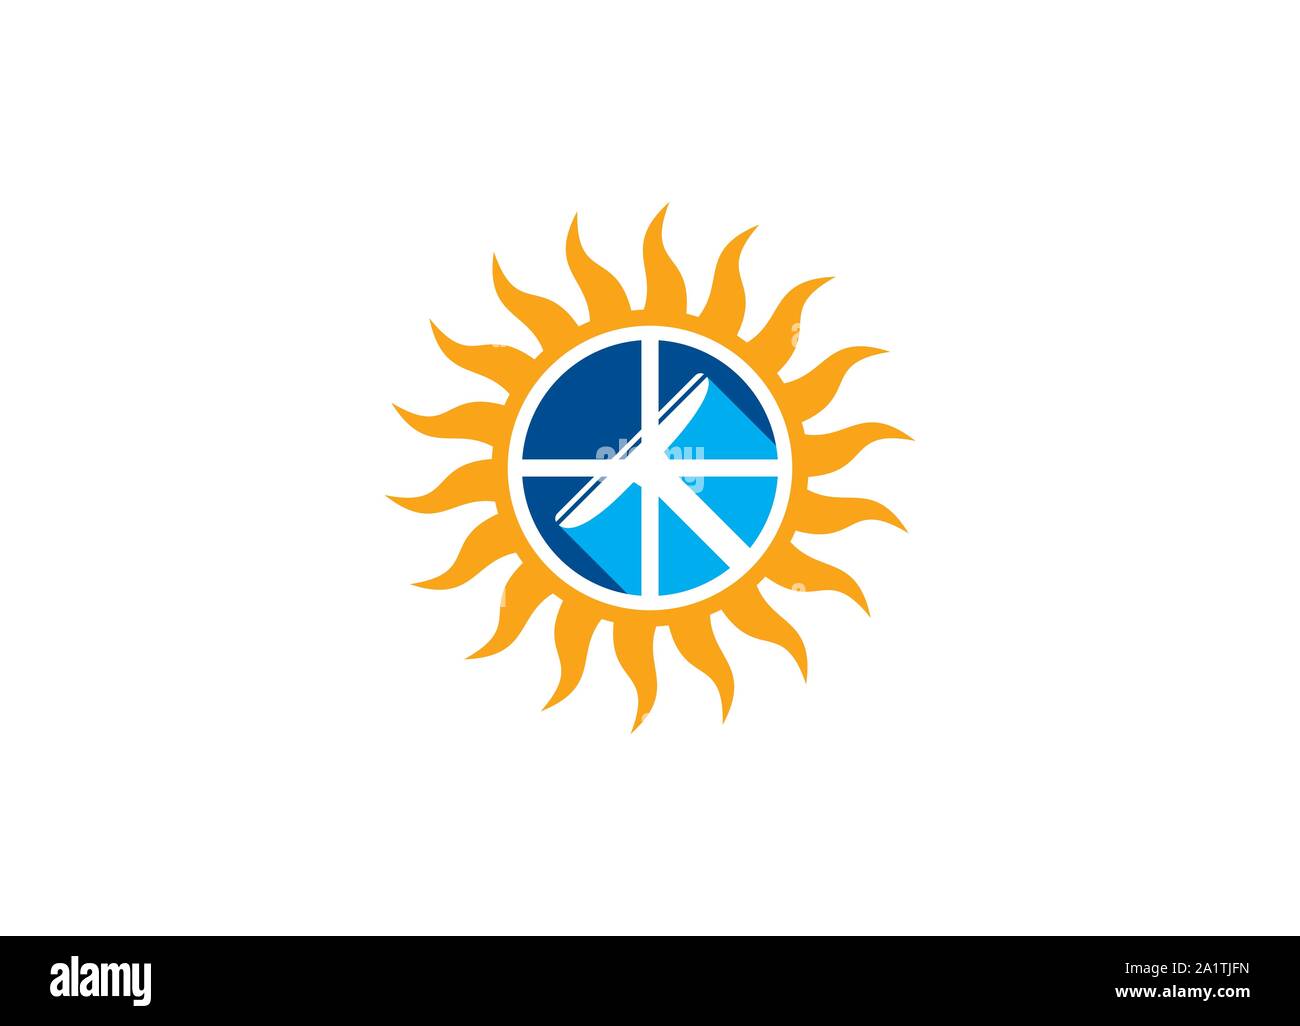 Vektor - Sunburst Sternsymbol, Sun burst Formen. Vintage light Starburst logo, Sunburst minimal Logo frames. Sonnenbrand Symbol Vektor, Sonne und Licht Logo. Stock Vektor